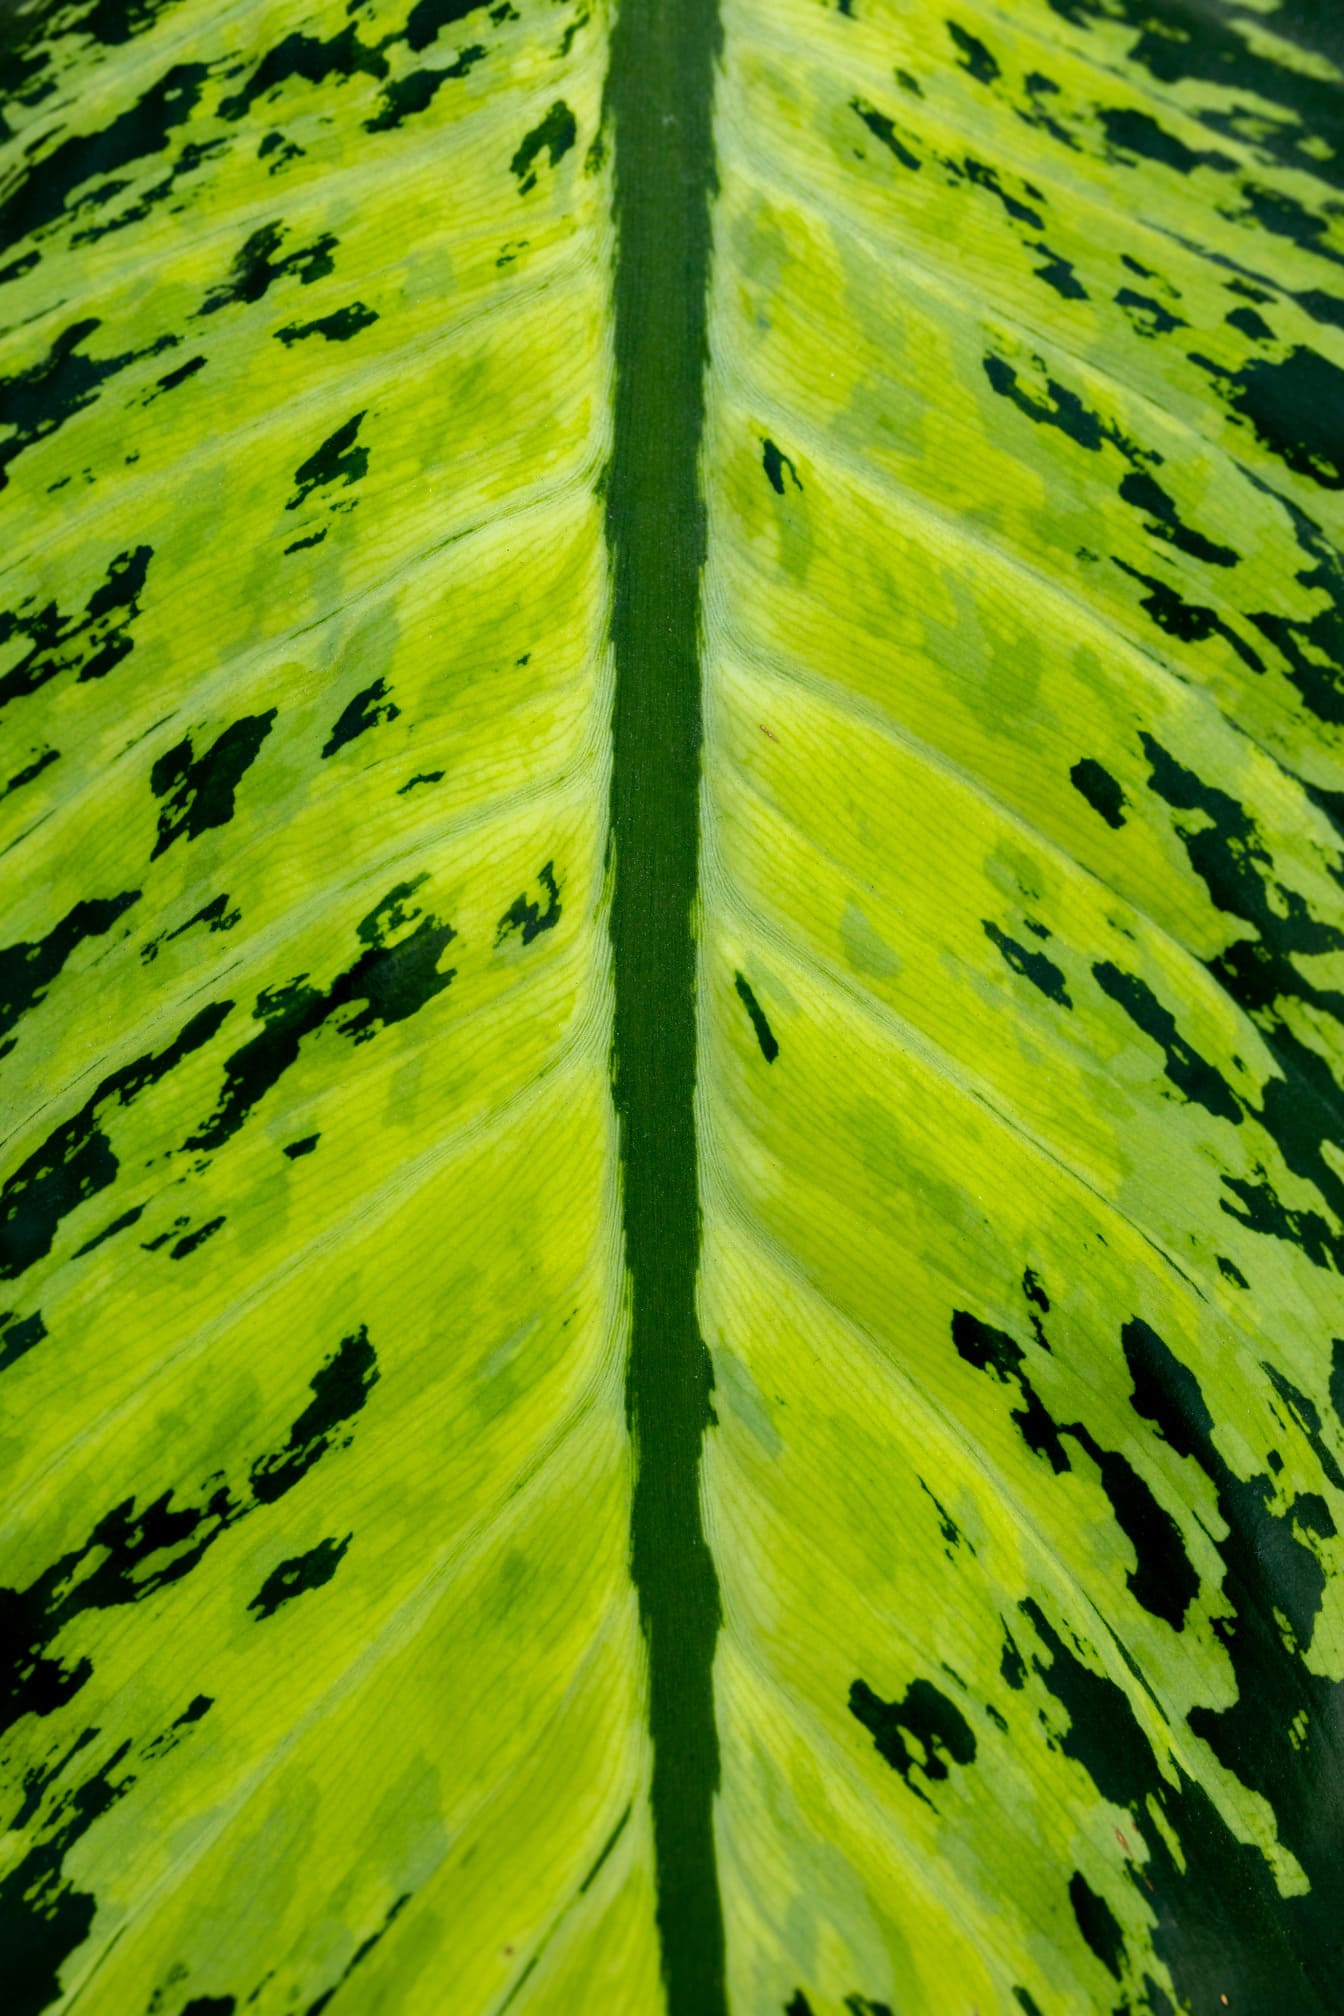 Canne muette (Dieffenbachia) feuille vert jaunâtre en gros plan